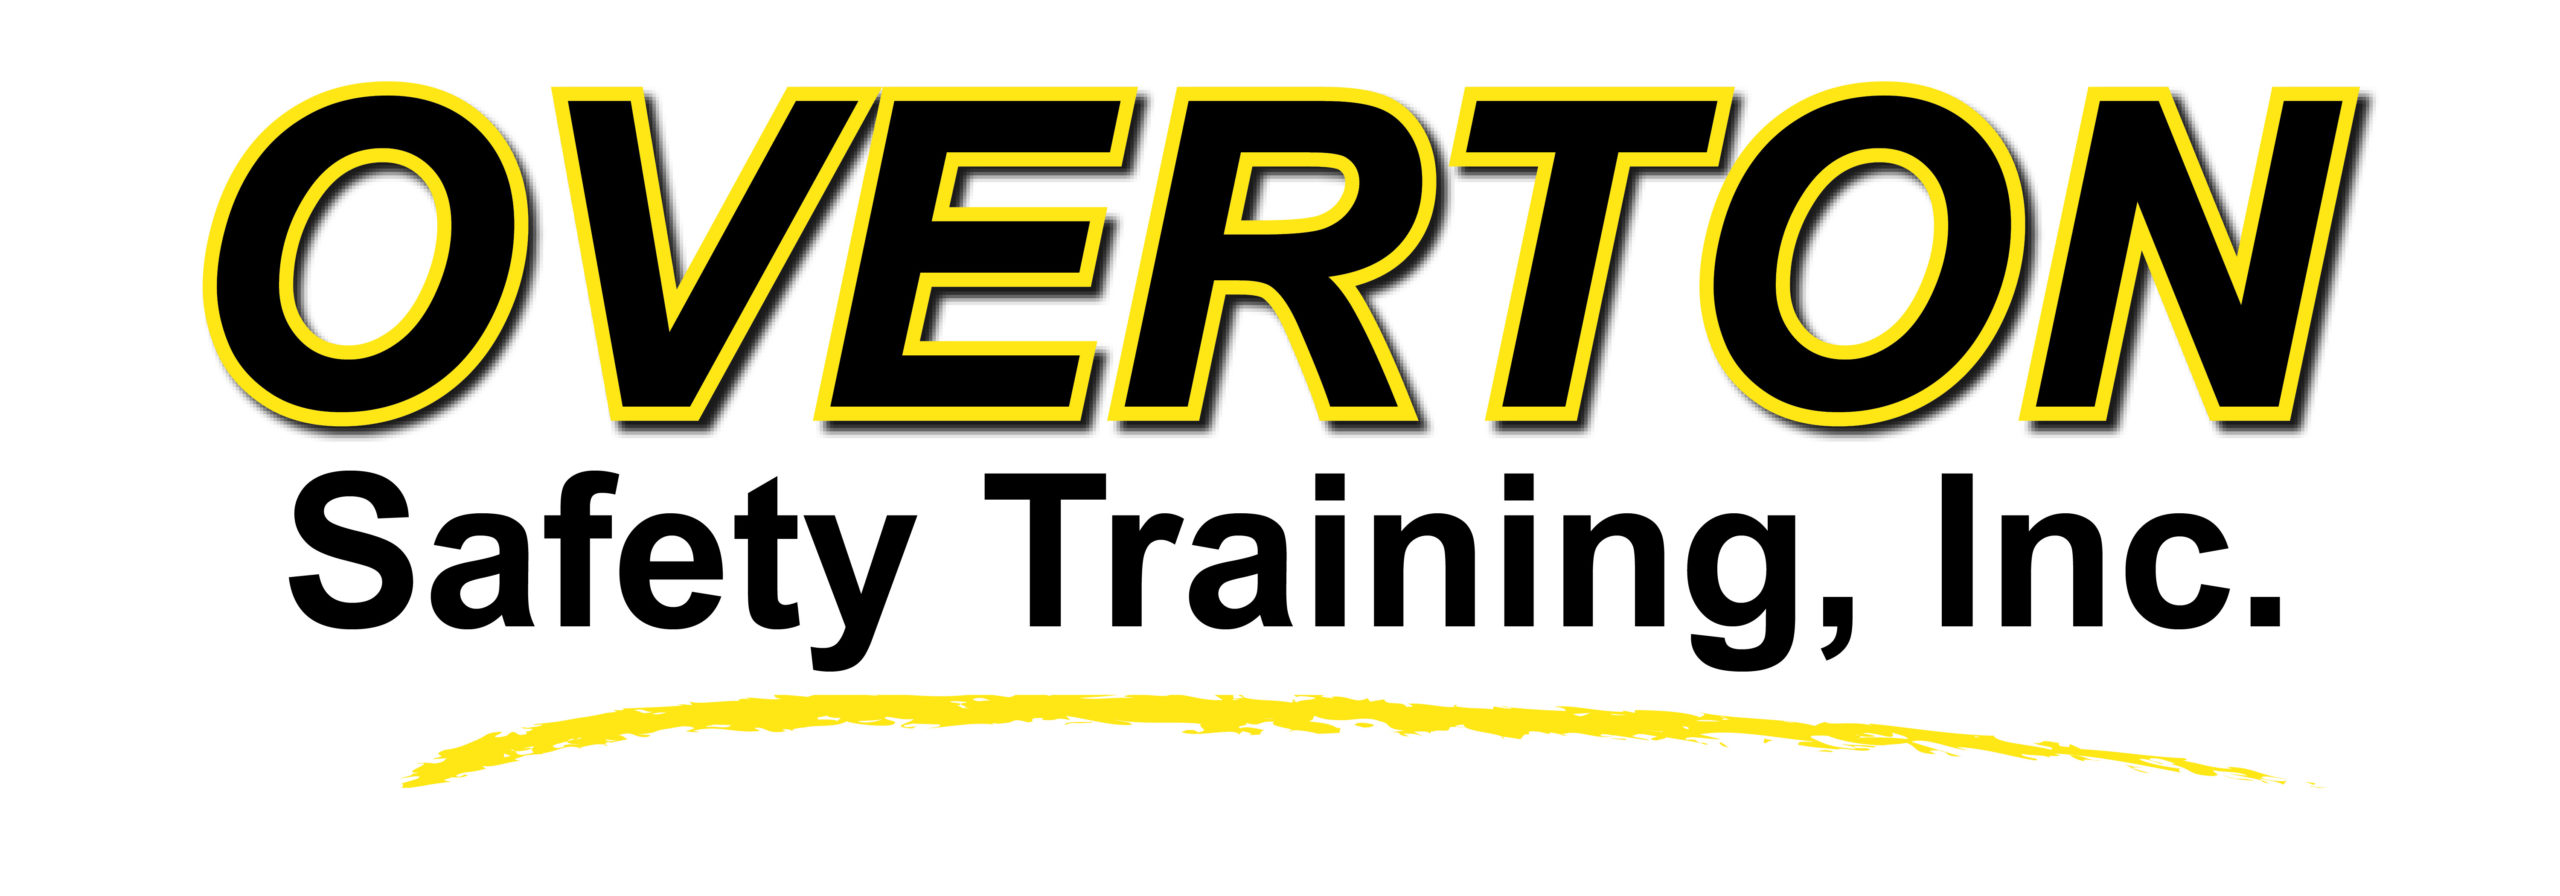 Overton Safety Training, Inc.